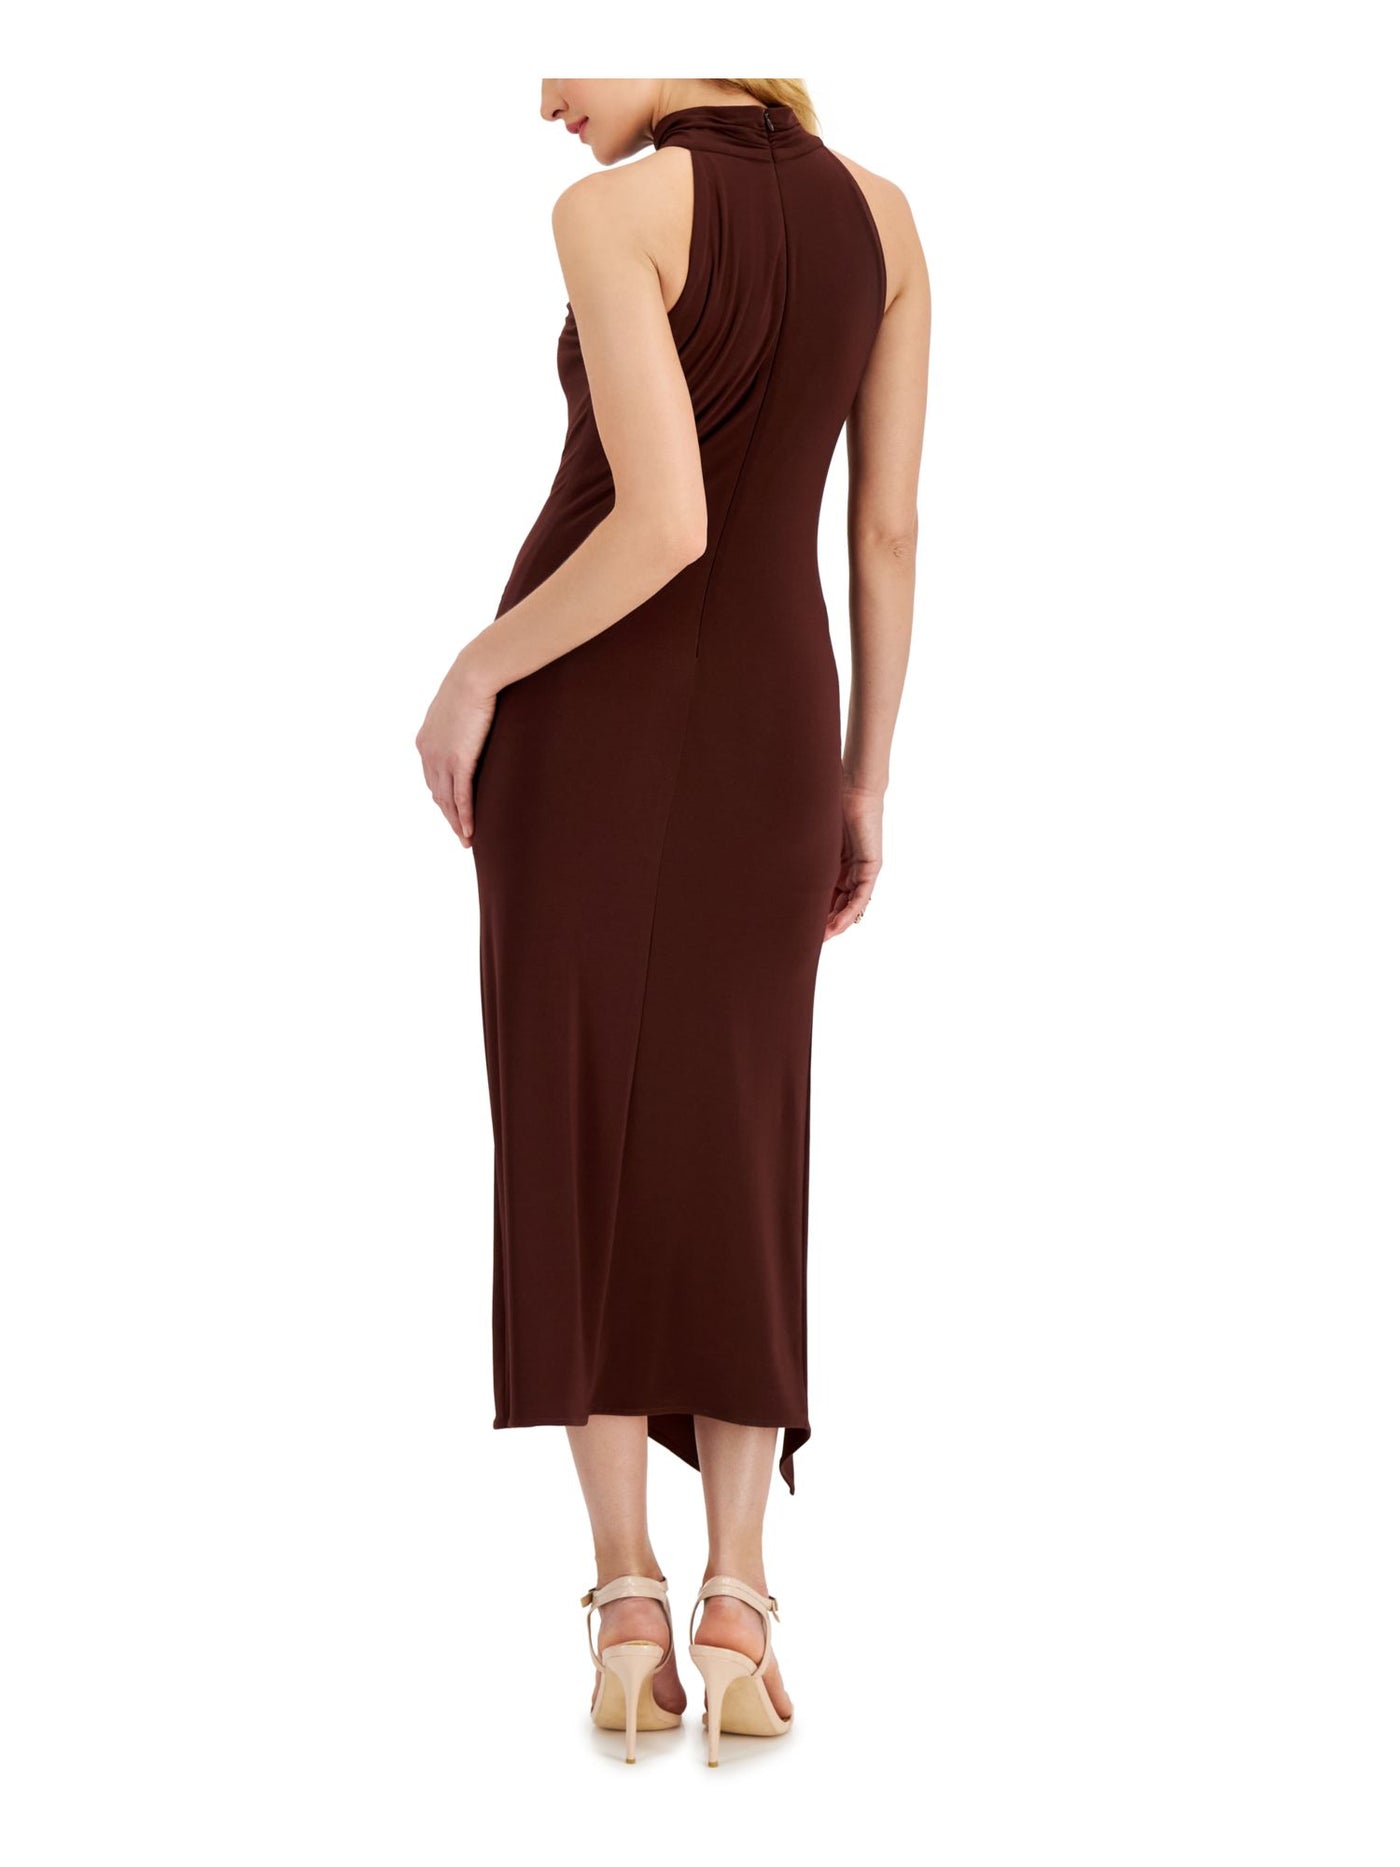 TAYLOR Womens Brown Zippered Slitted Shirred Side Asymmetrical Hem Sleeveless Mock Neck Midi Party Sheath Dress 10